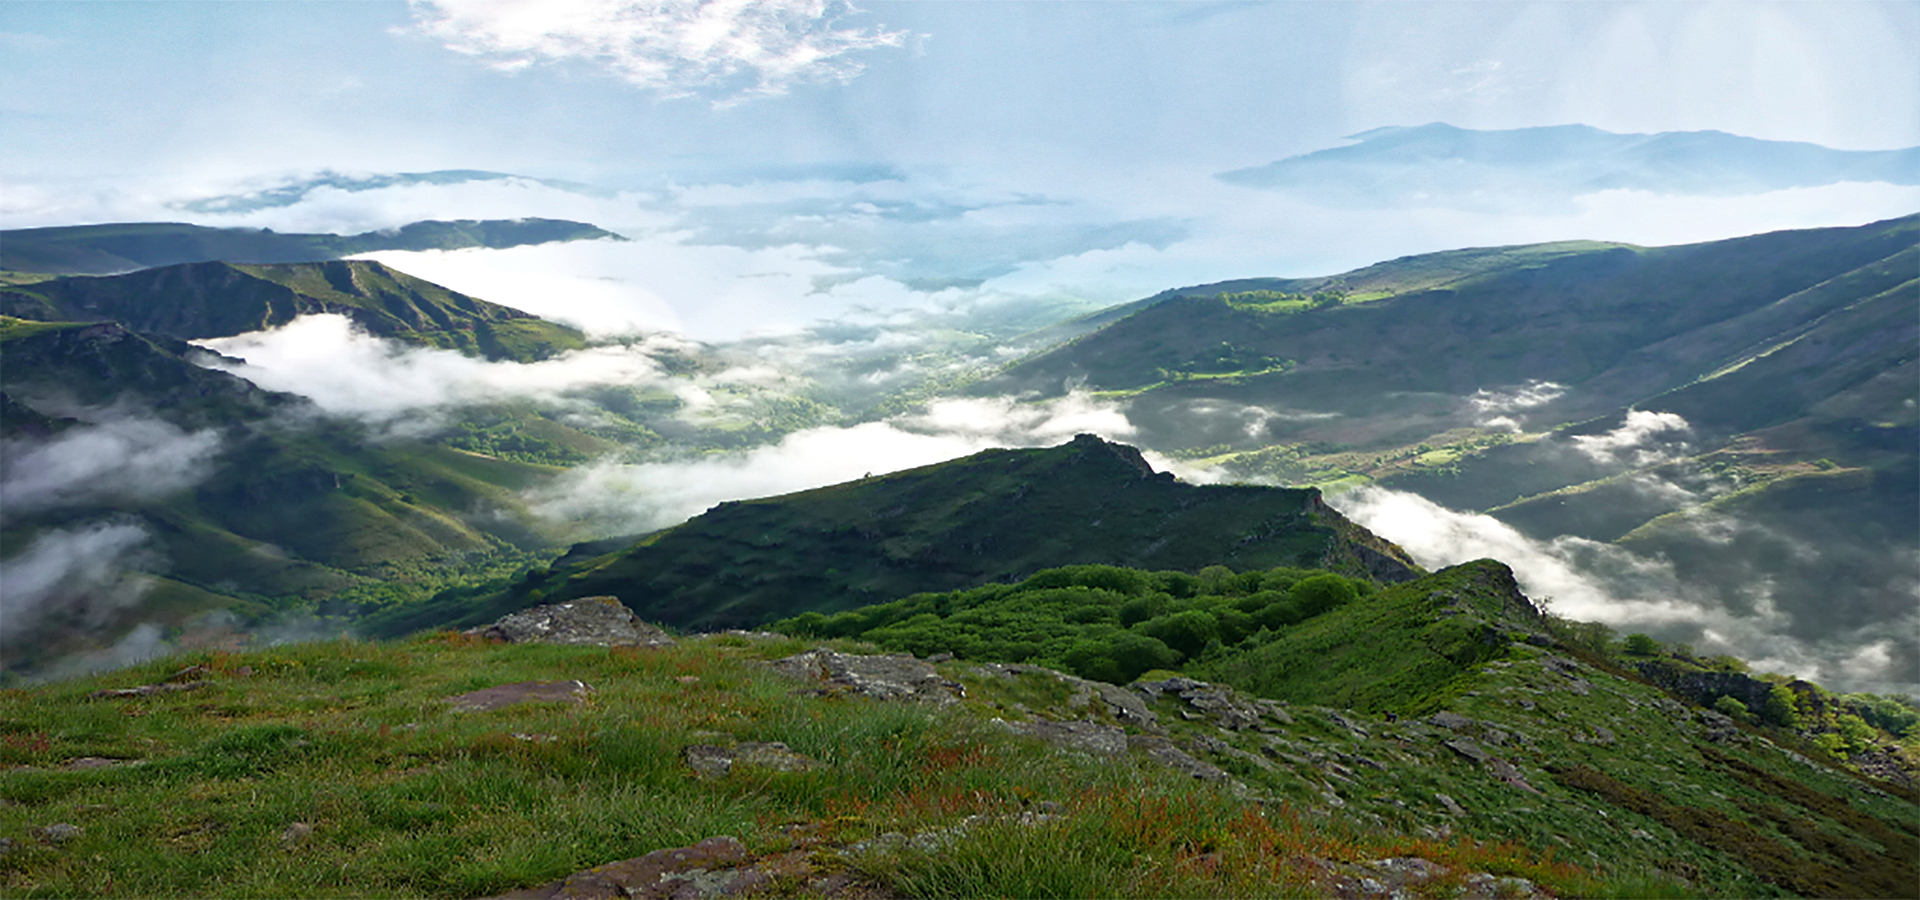 montagne basque avec brouillard